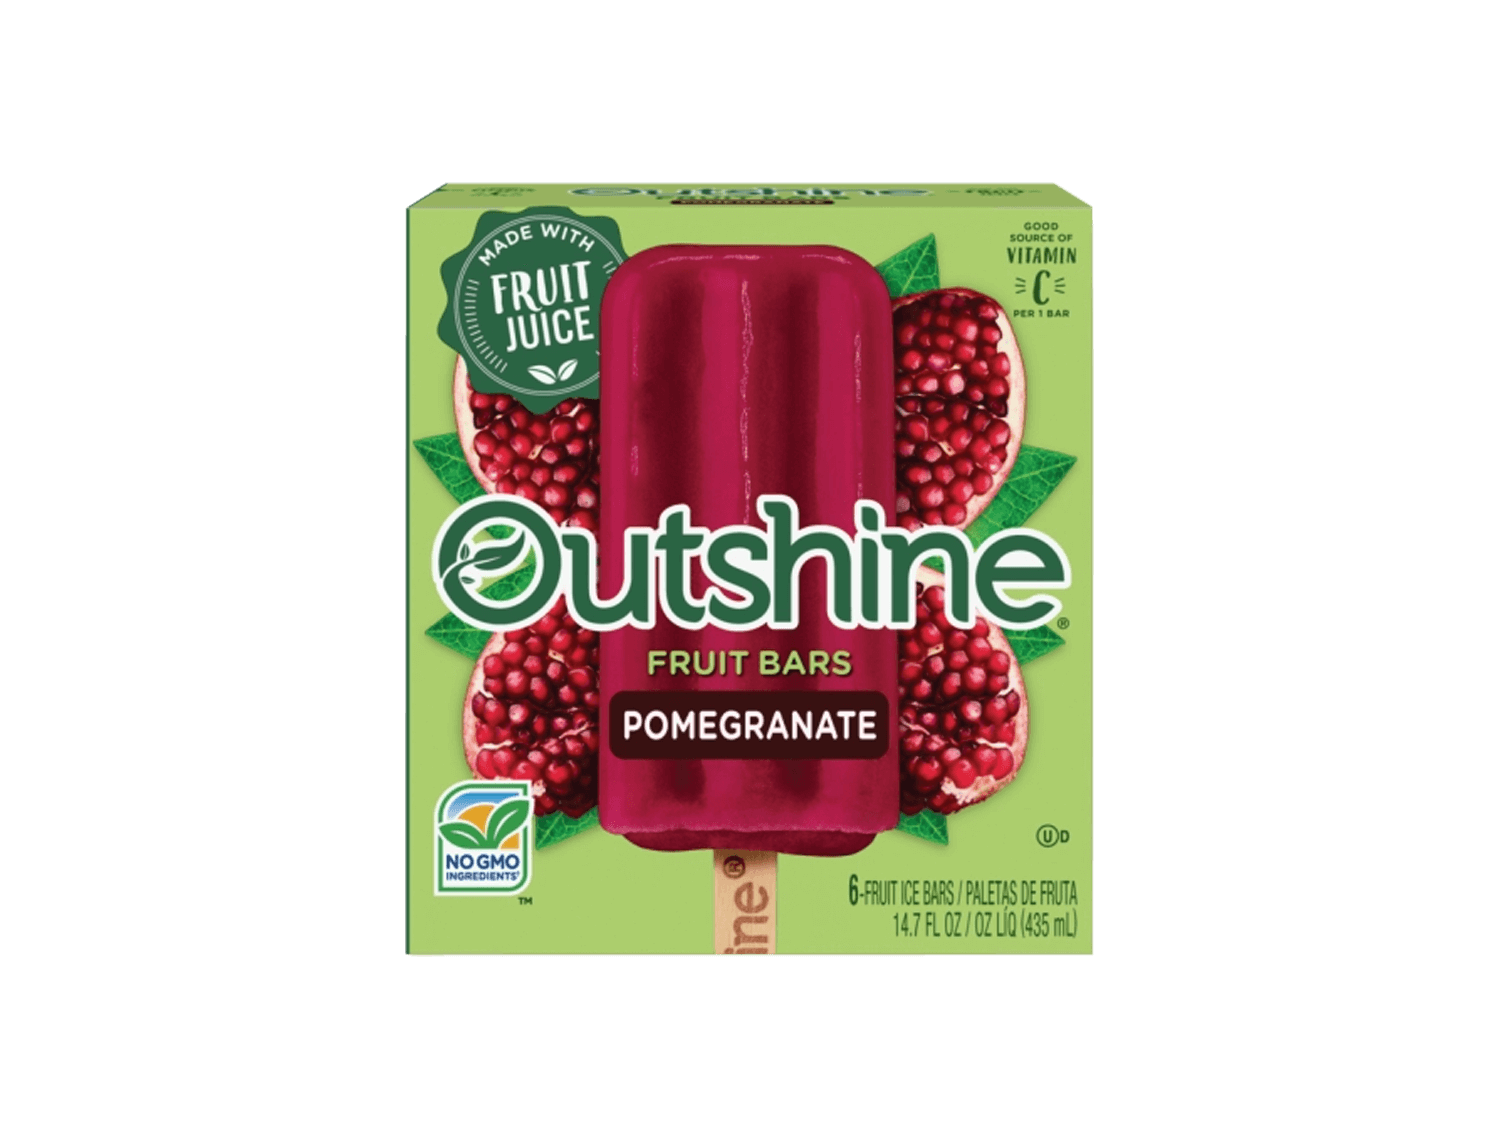 box of Outshine pomegranate fruit bars